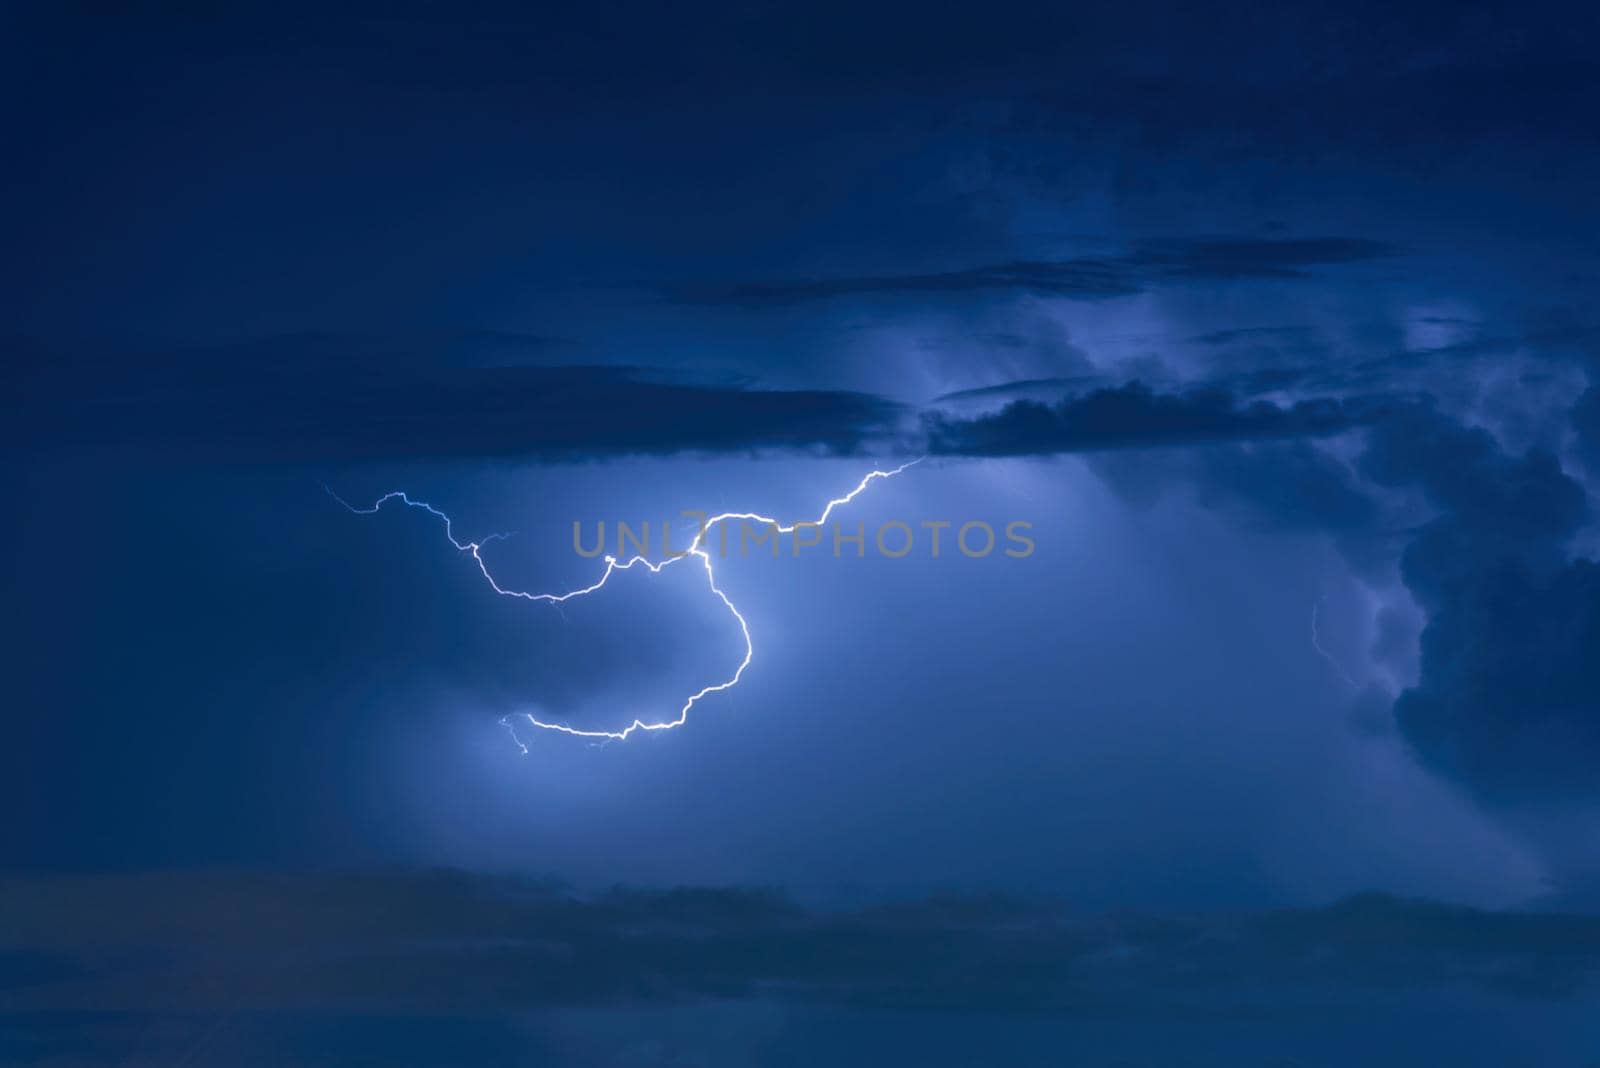 Thunder storm lightning strike on the dark cloudy sky background at night.